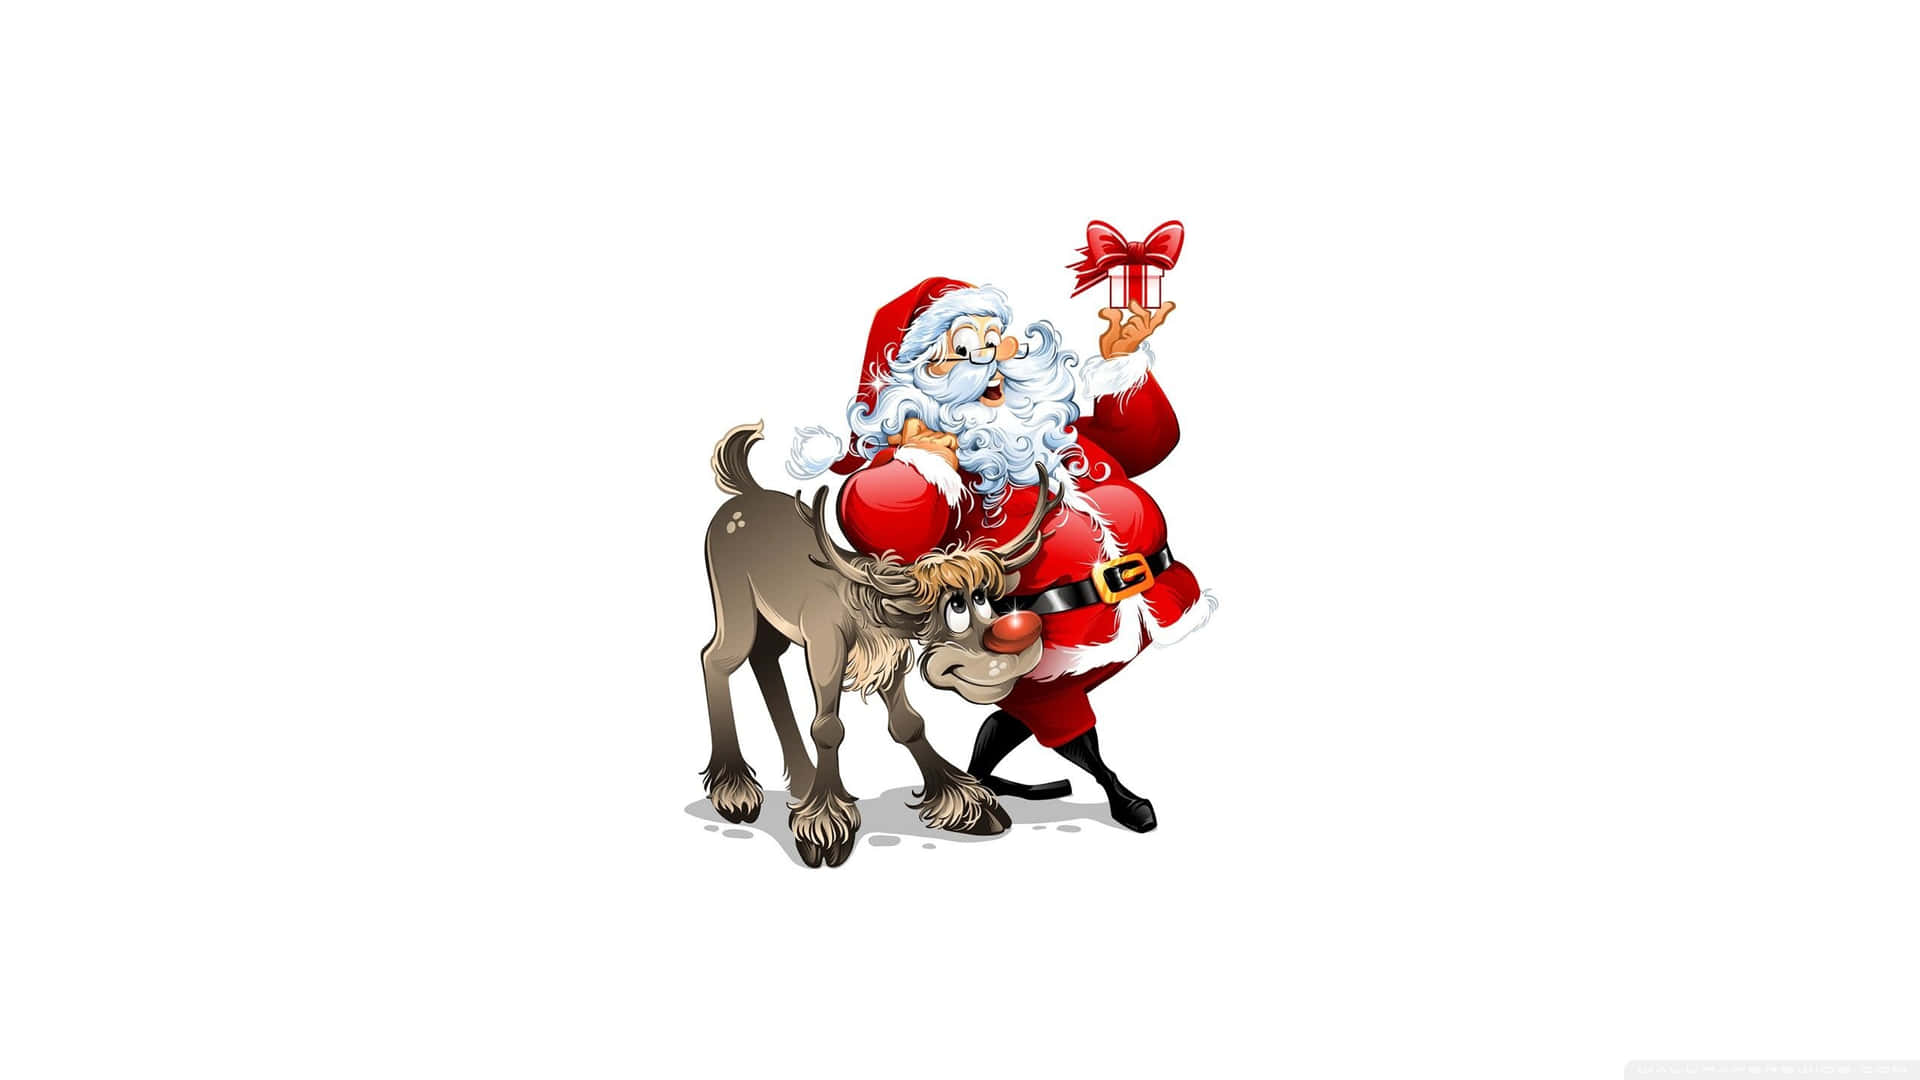 Illuminated Santa Claus Holding A Bag Full Of Gifts